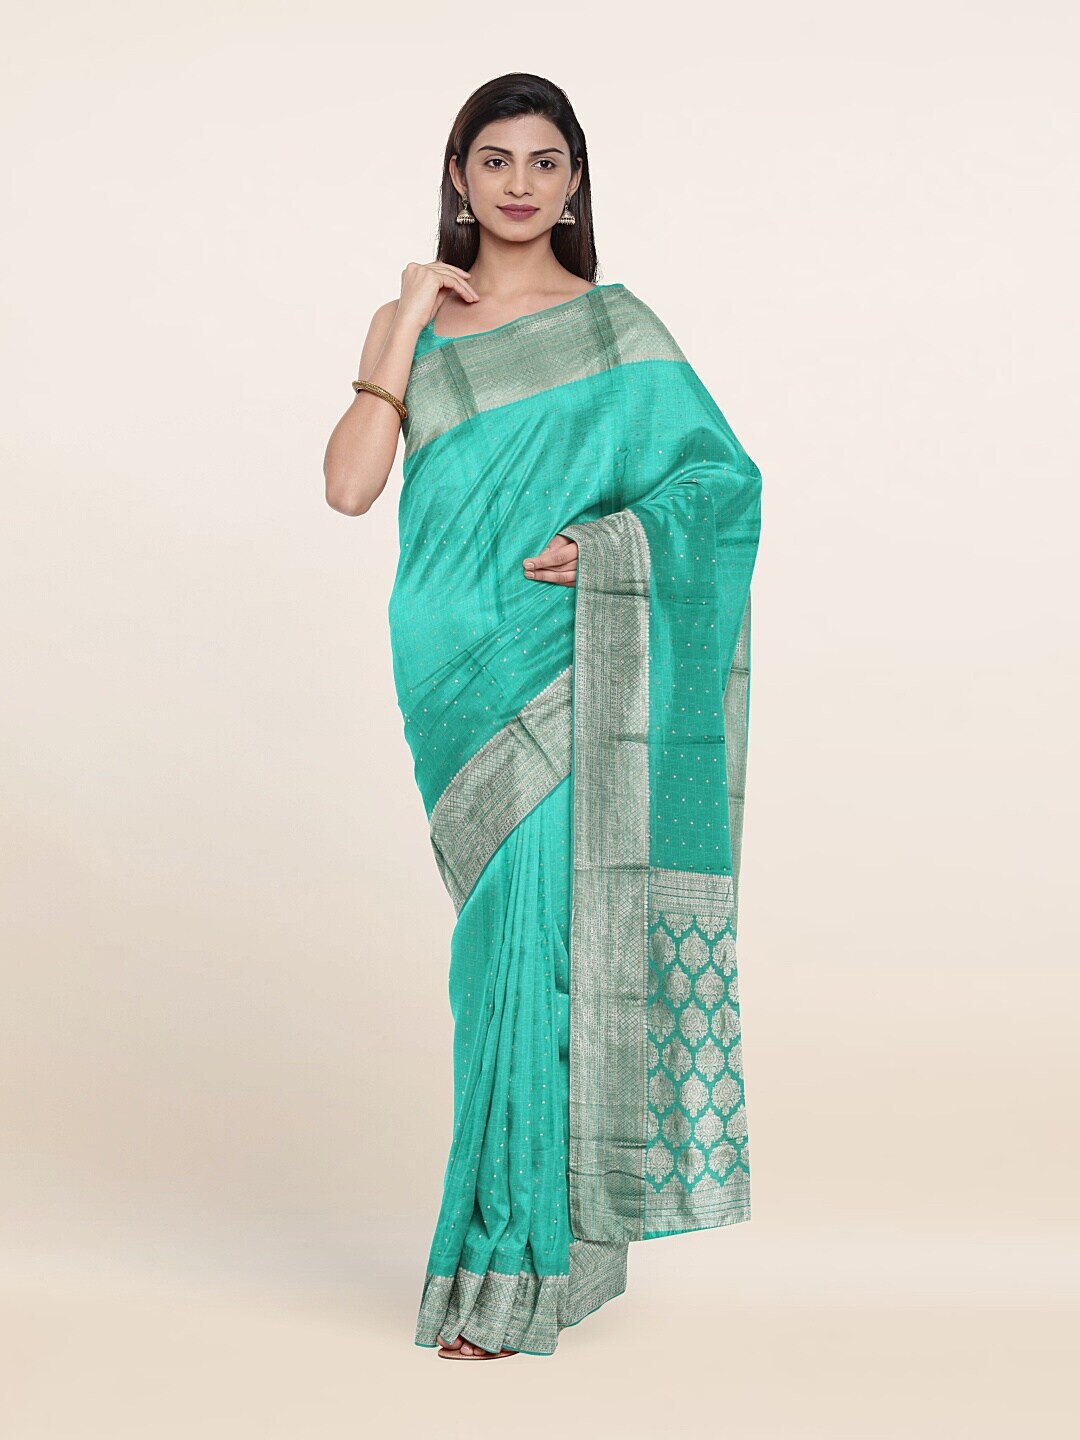 Pothys Green & Silver-Toned Pure Silk Saree Price in India